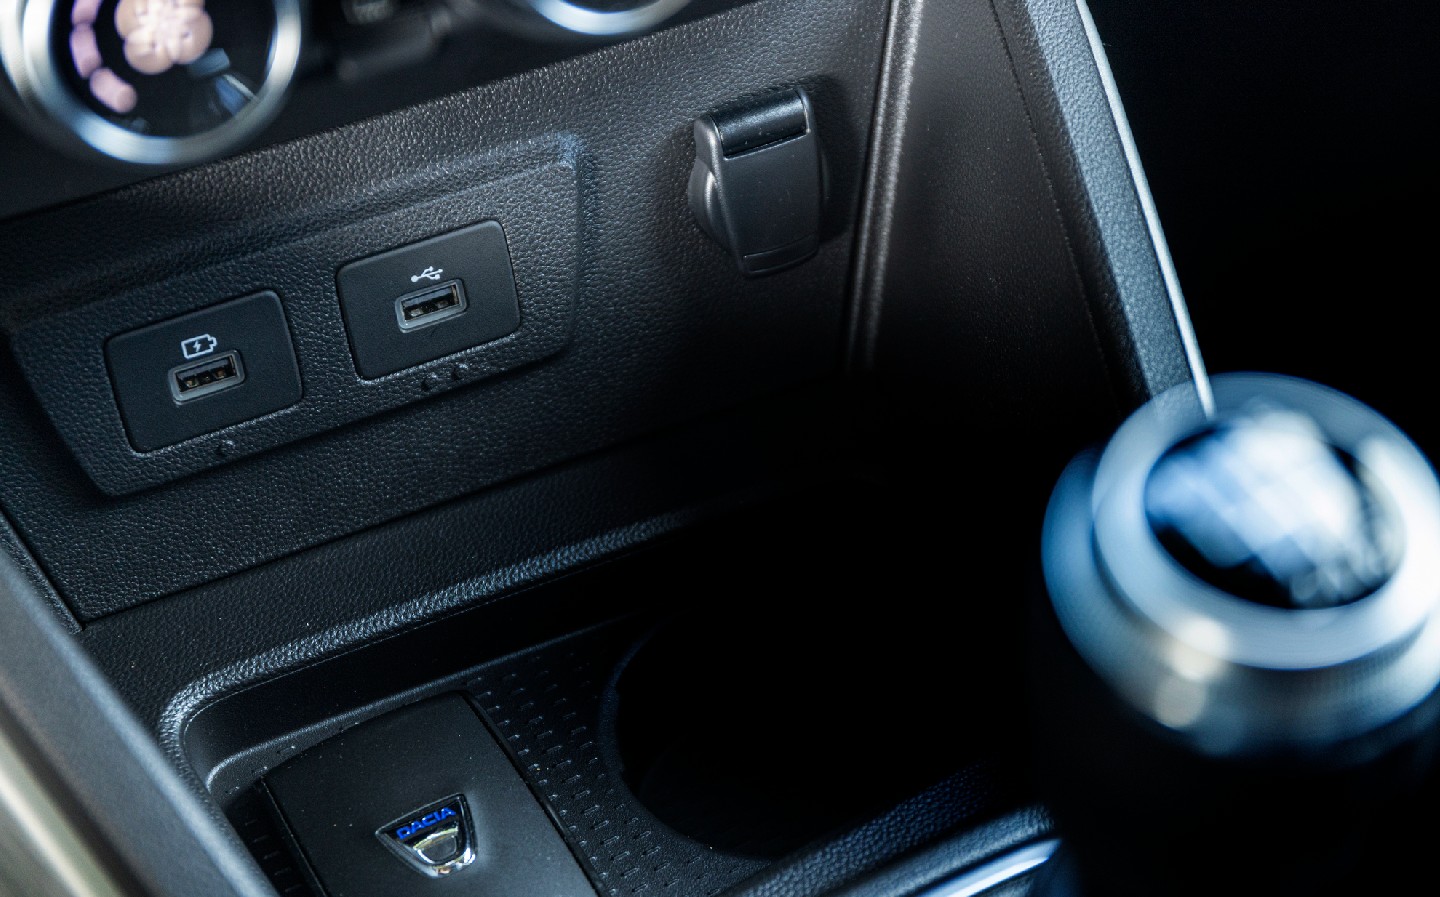 USB sockets - Dacia Duster 2021 review